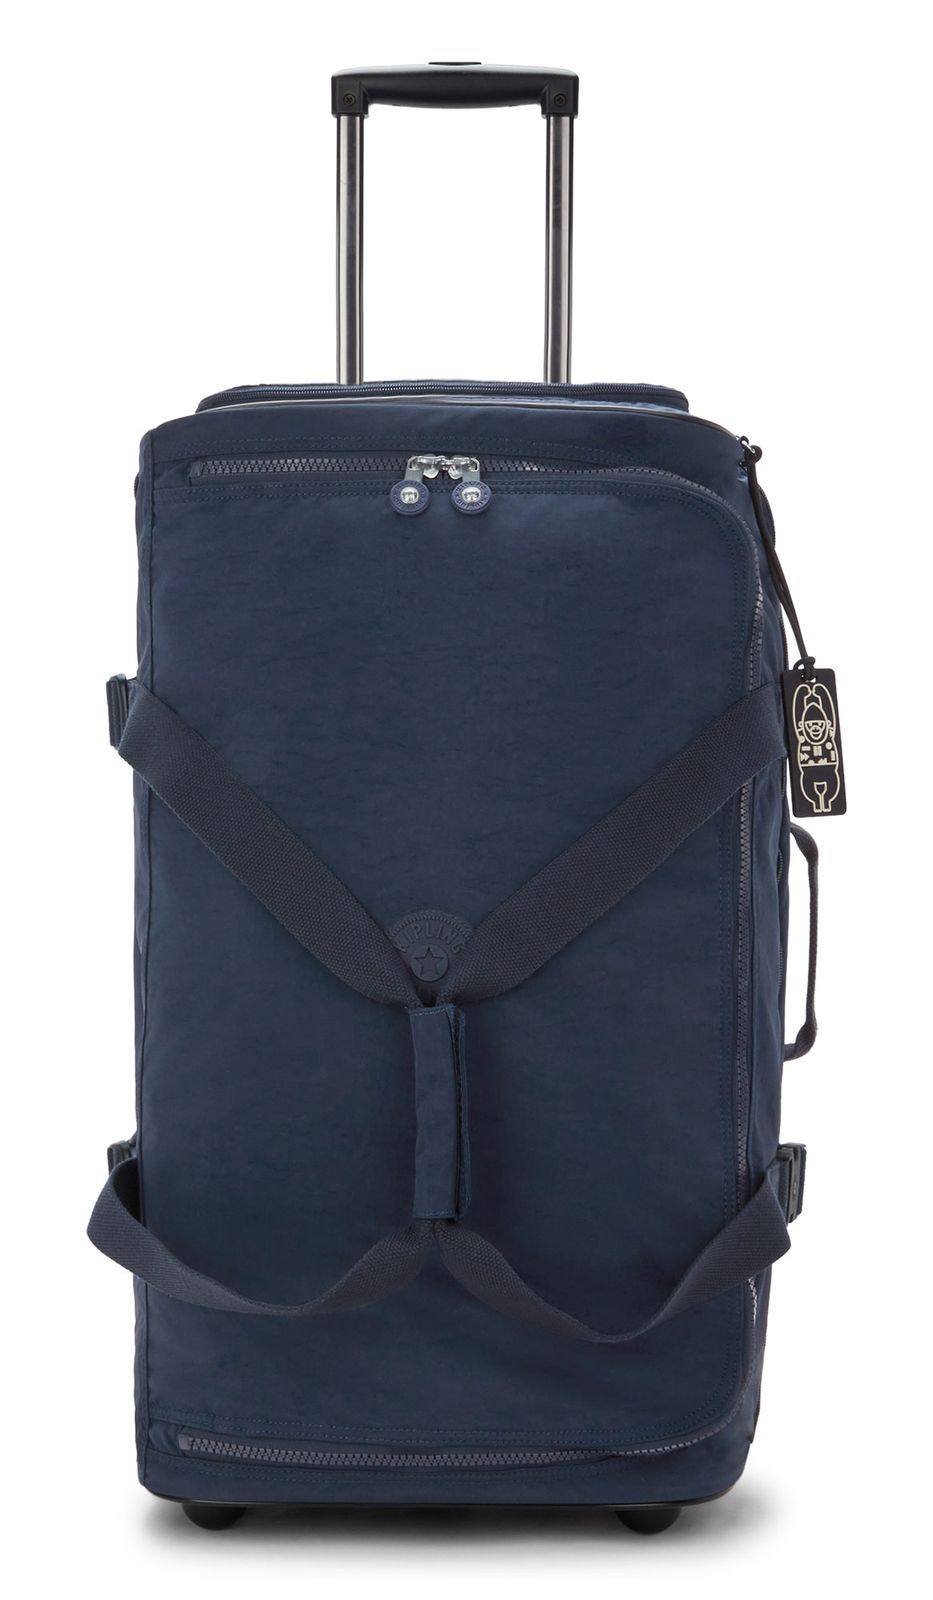 kipling trolley Teagan M Blue Bleu 2 | Buy bags, purses & accessories ...